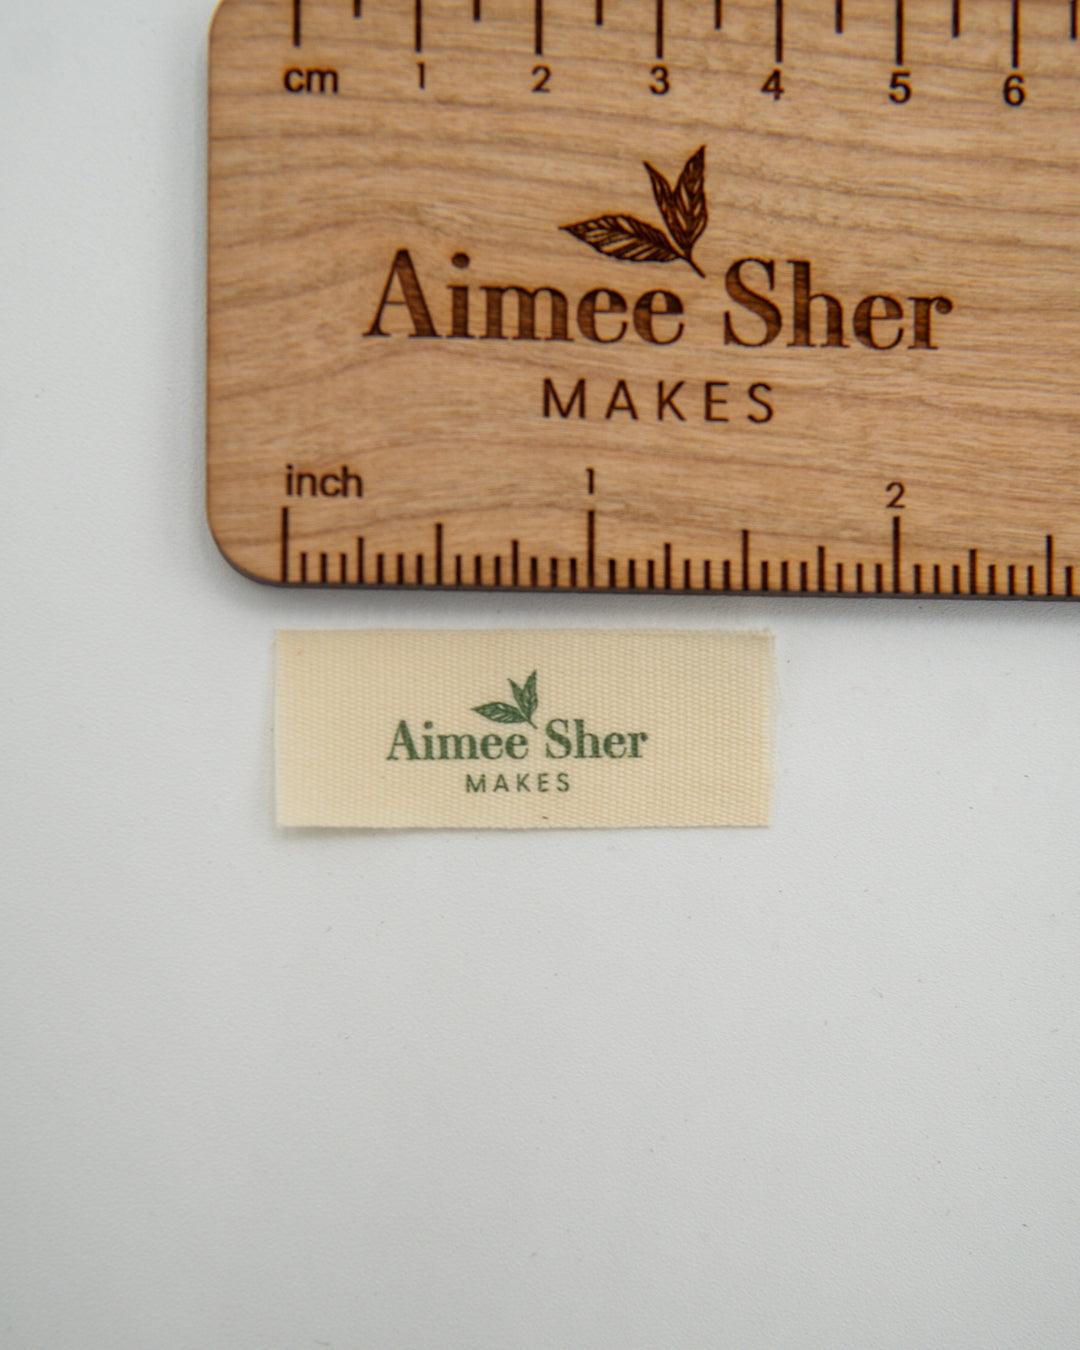 Aimee Sher Makes Garment Label - Aimee Sher Makes